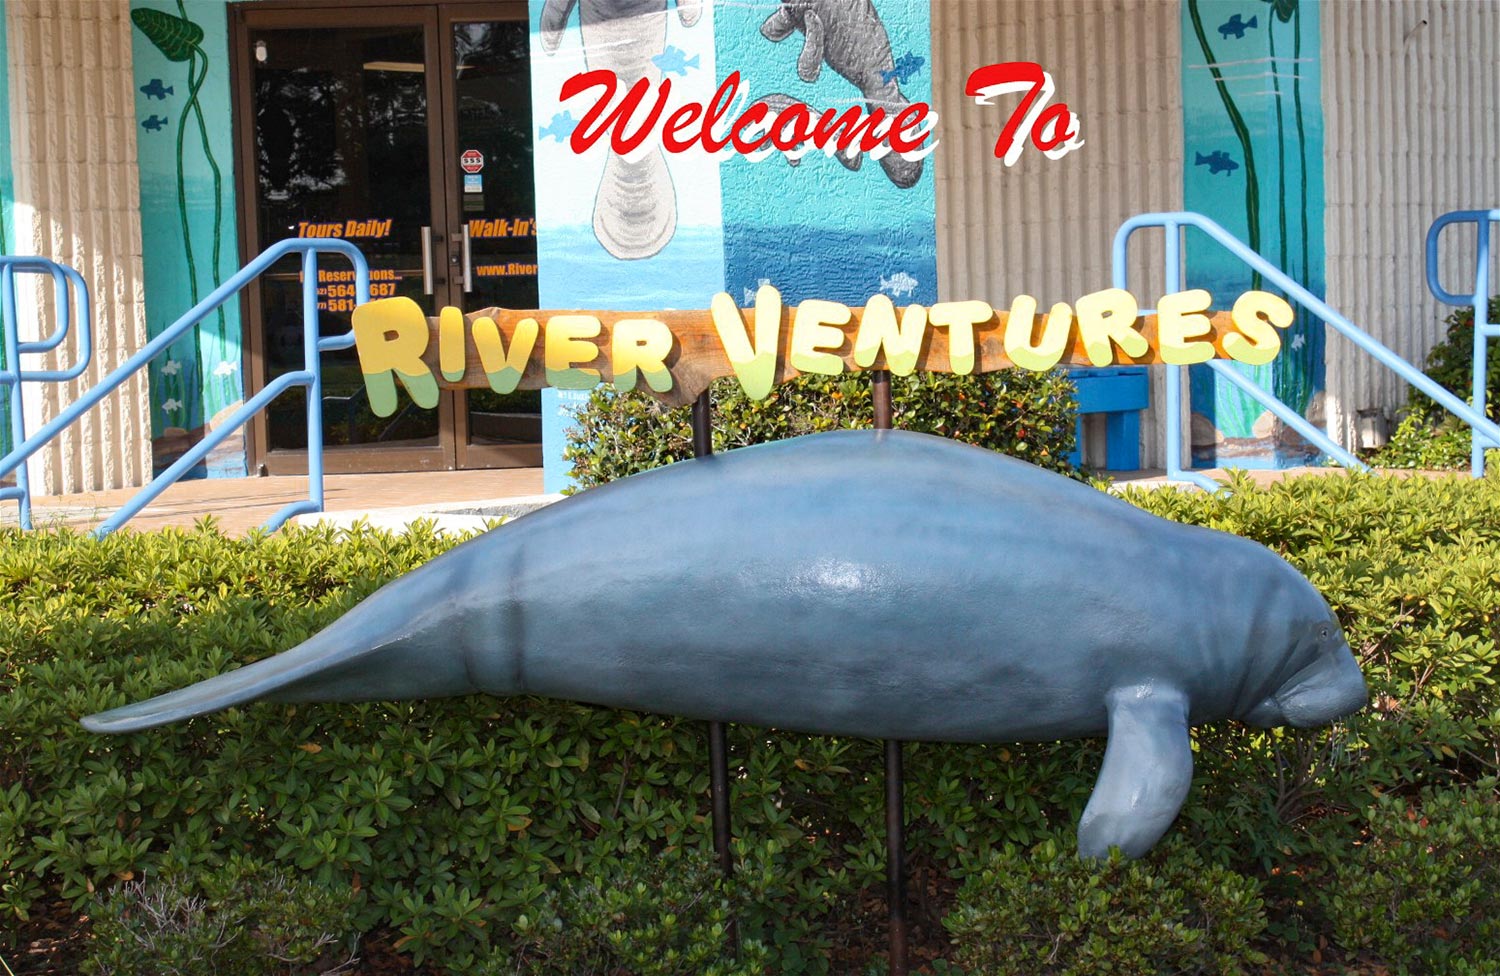 River Ventures, Crystal River, Floride, États-Unis / River Ventures, Crystal River, Florida, USA